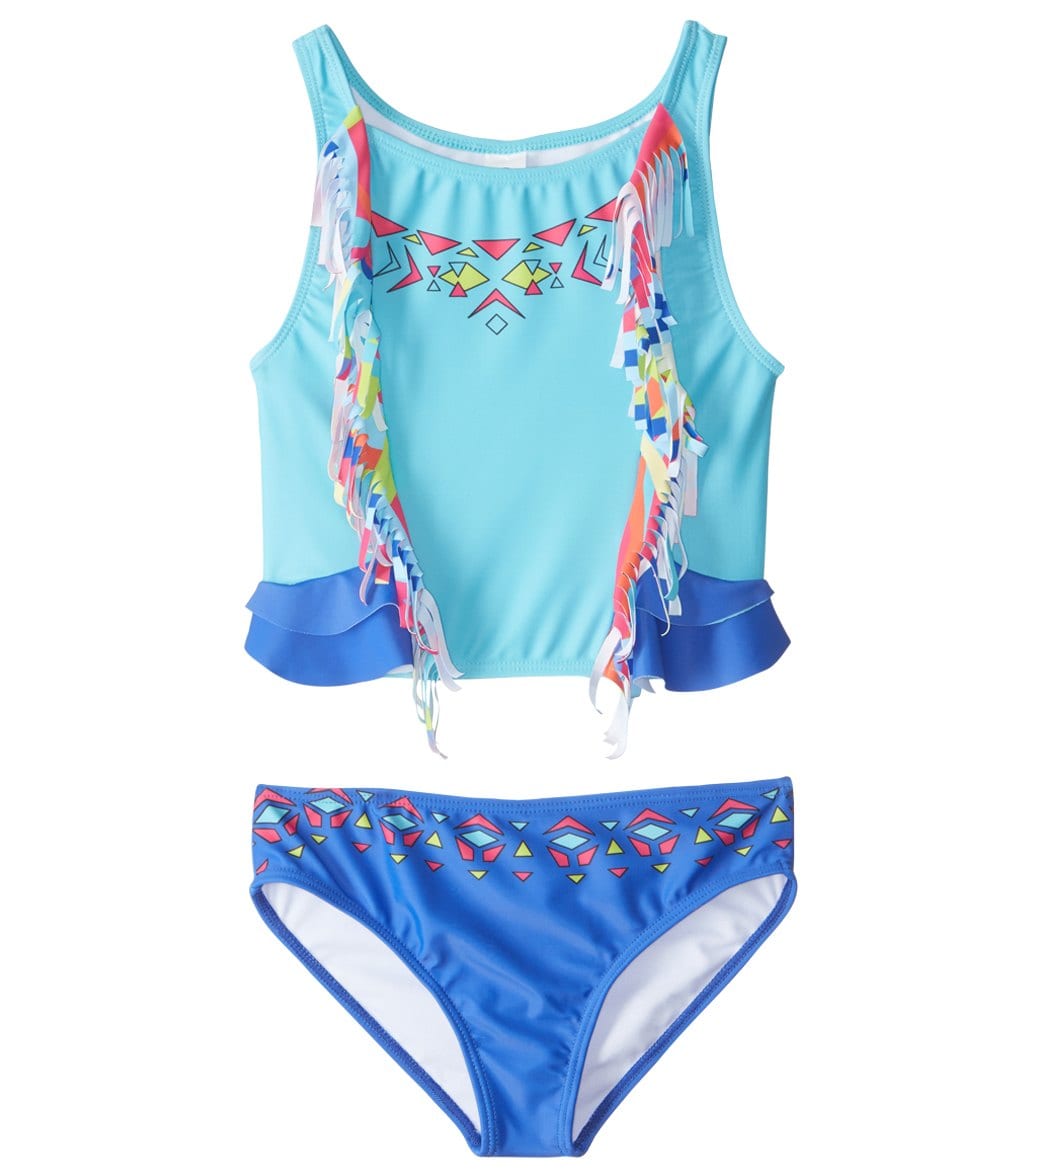 Limeapple Upf 50+ Cali Two Piece Bikini Set 6 Months-4T - Turquoise 12-18 Months Nylon/Spandex - Swimoutlet.com